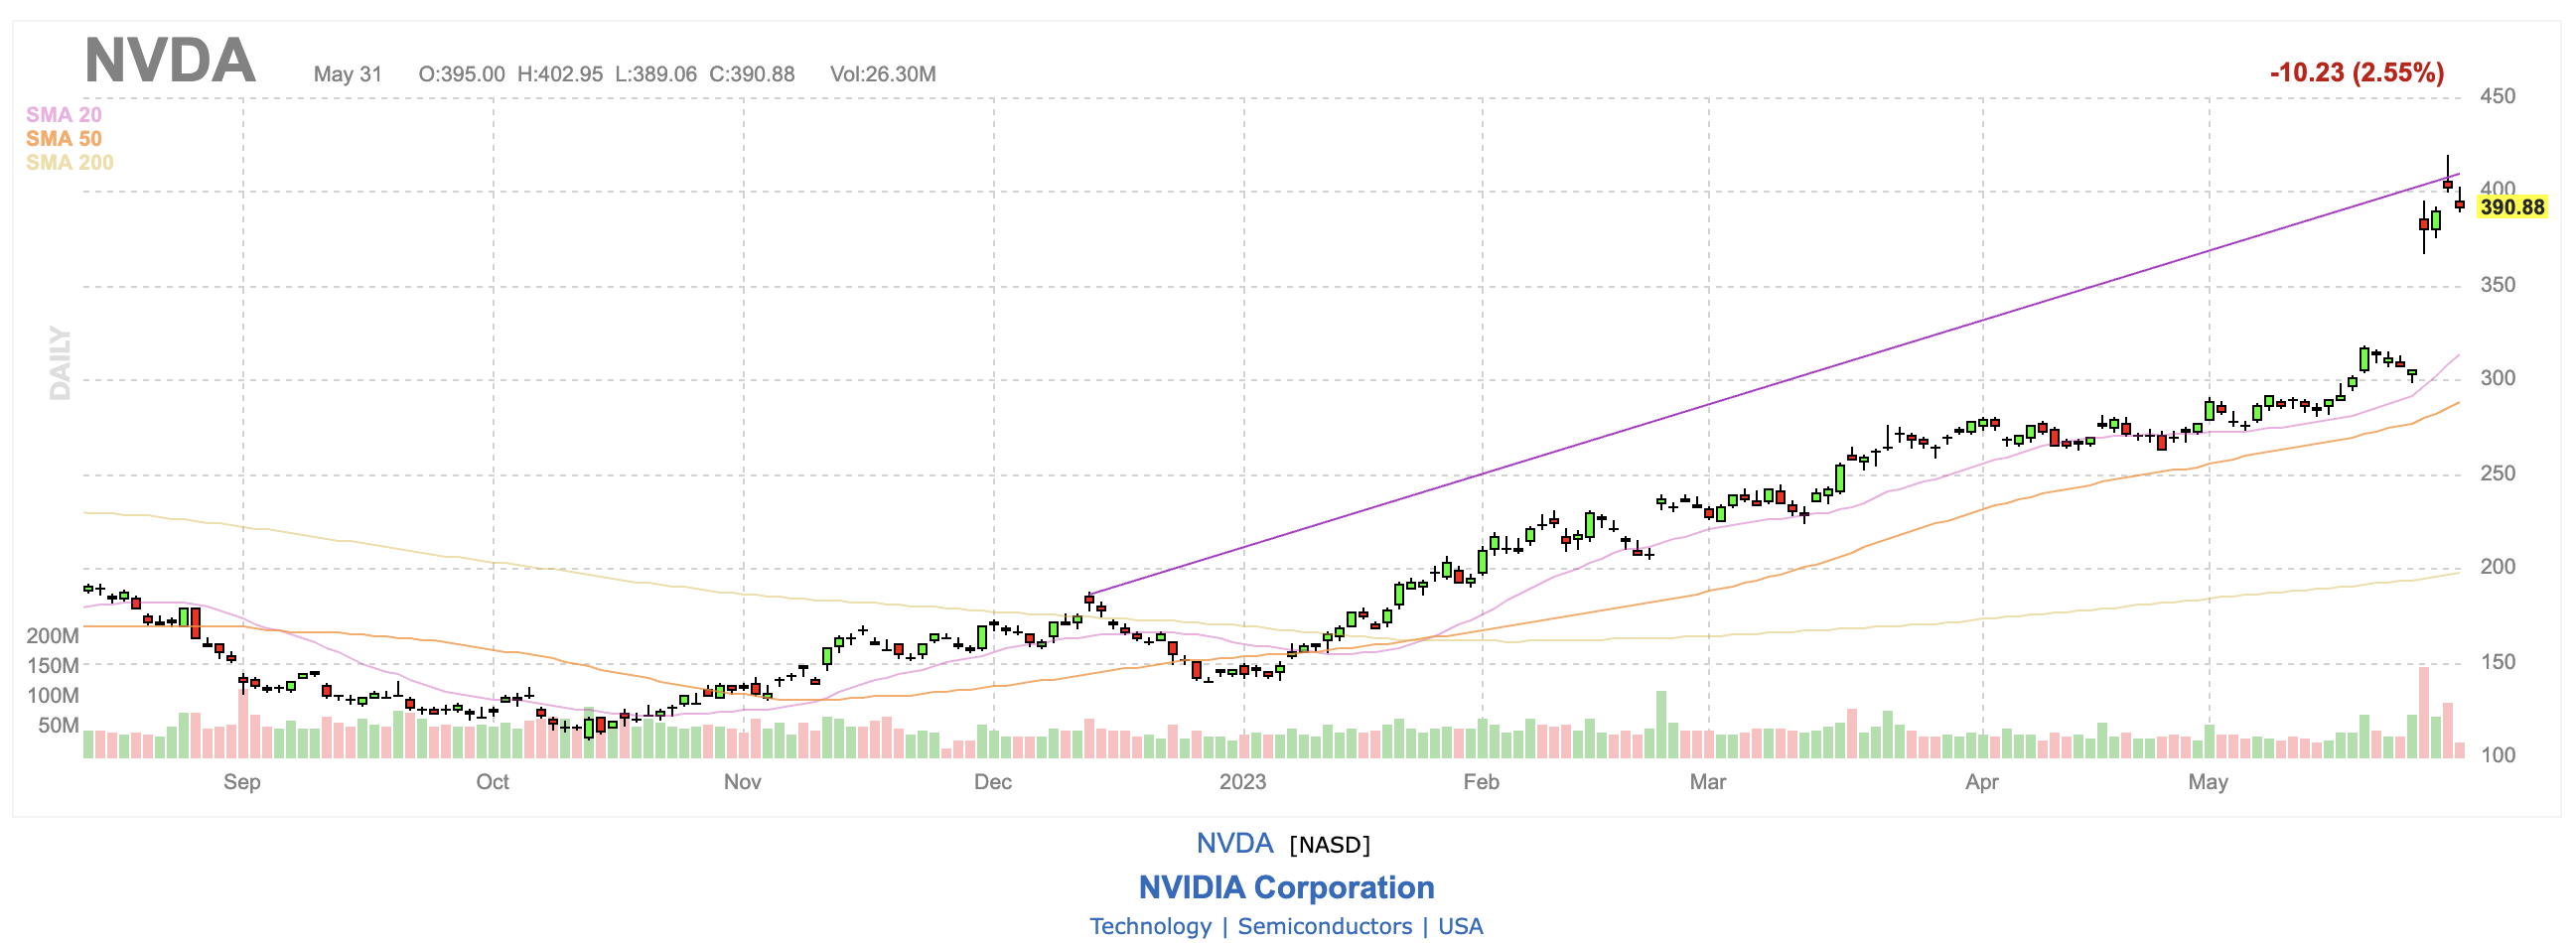 NVDA stock chart 2023-05-30